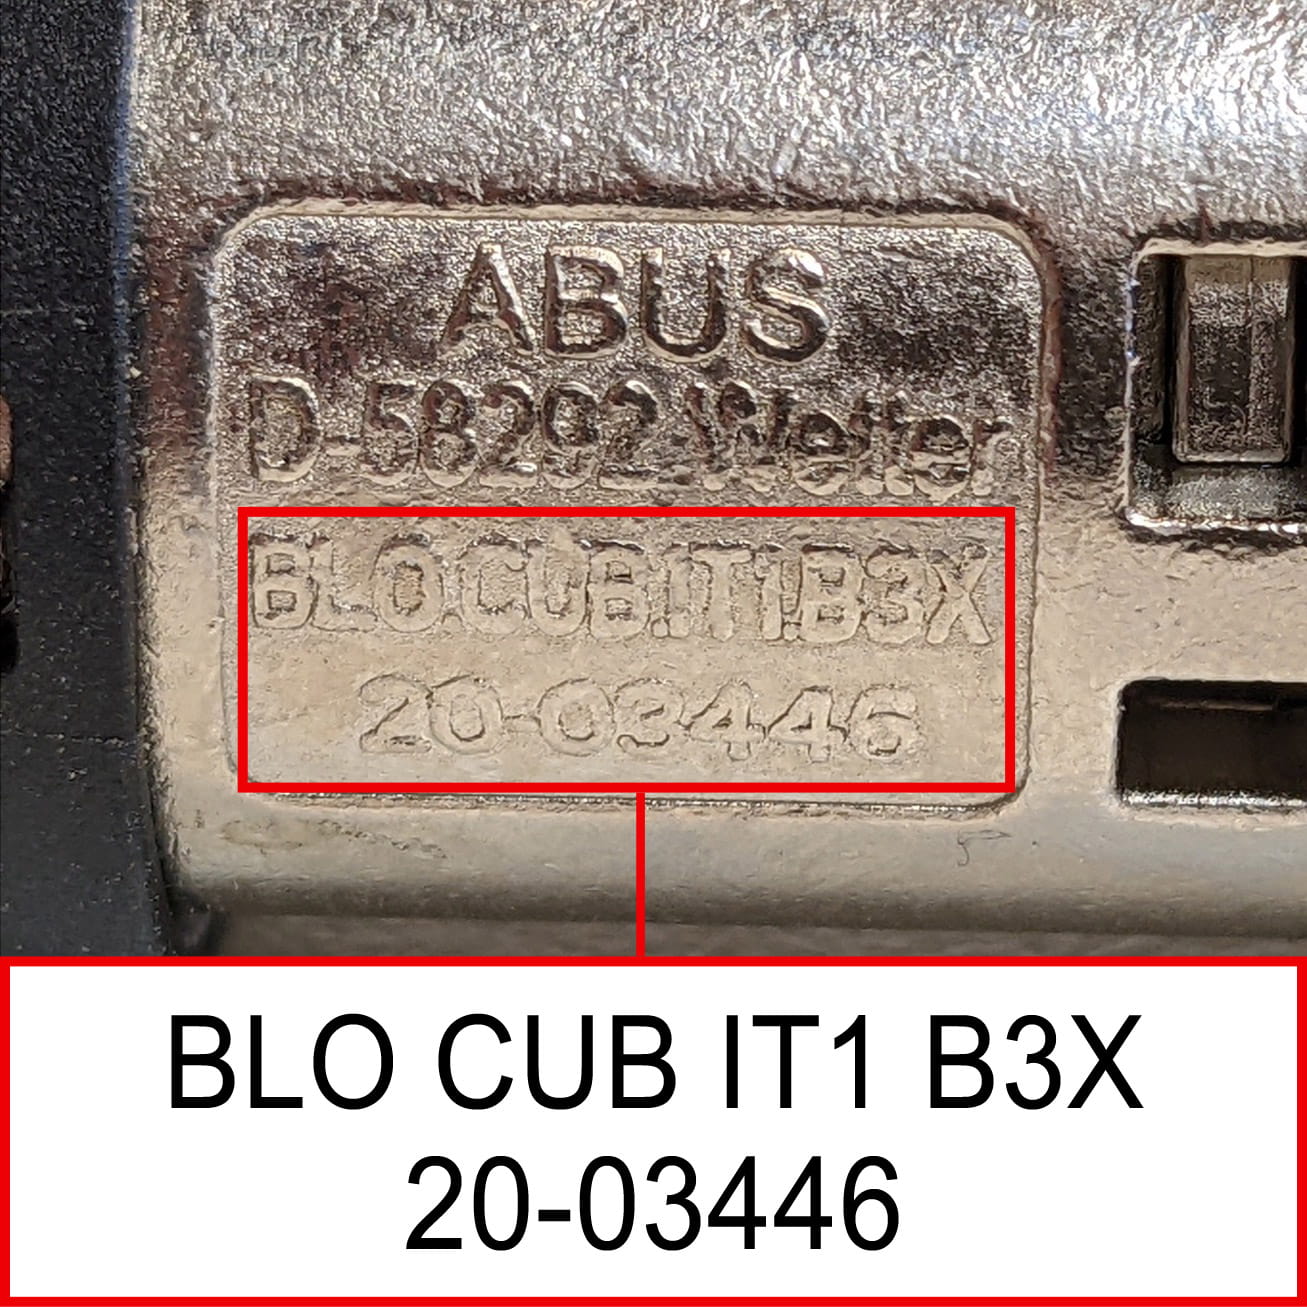 ABUS Cube InTube Akkuschloss BLO CUB IT1 B3X XPlus (20-03446)